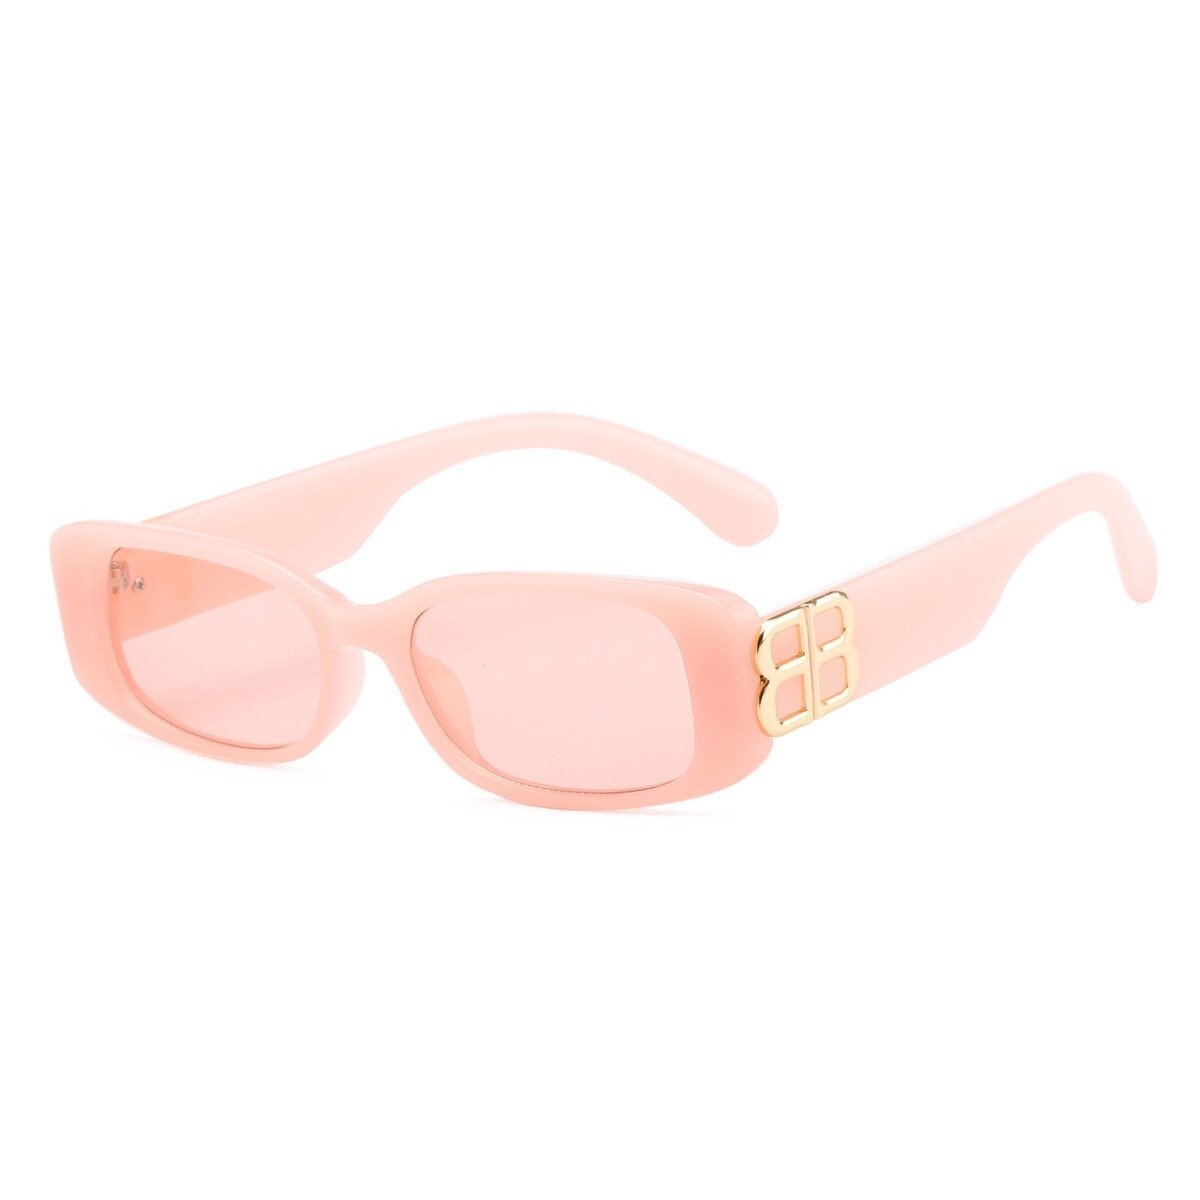 2021 Luxury Brand Designer Retro Fashion Small Square Frame High Quality Sunglasses For Men And Women-Unique and Classy